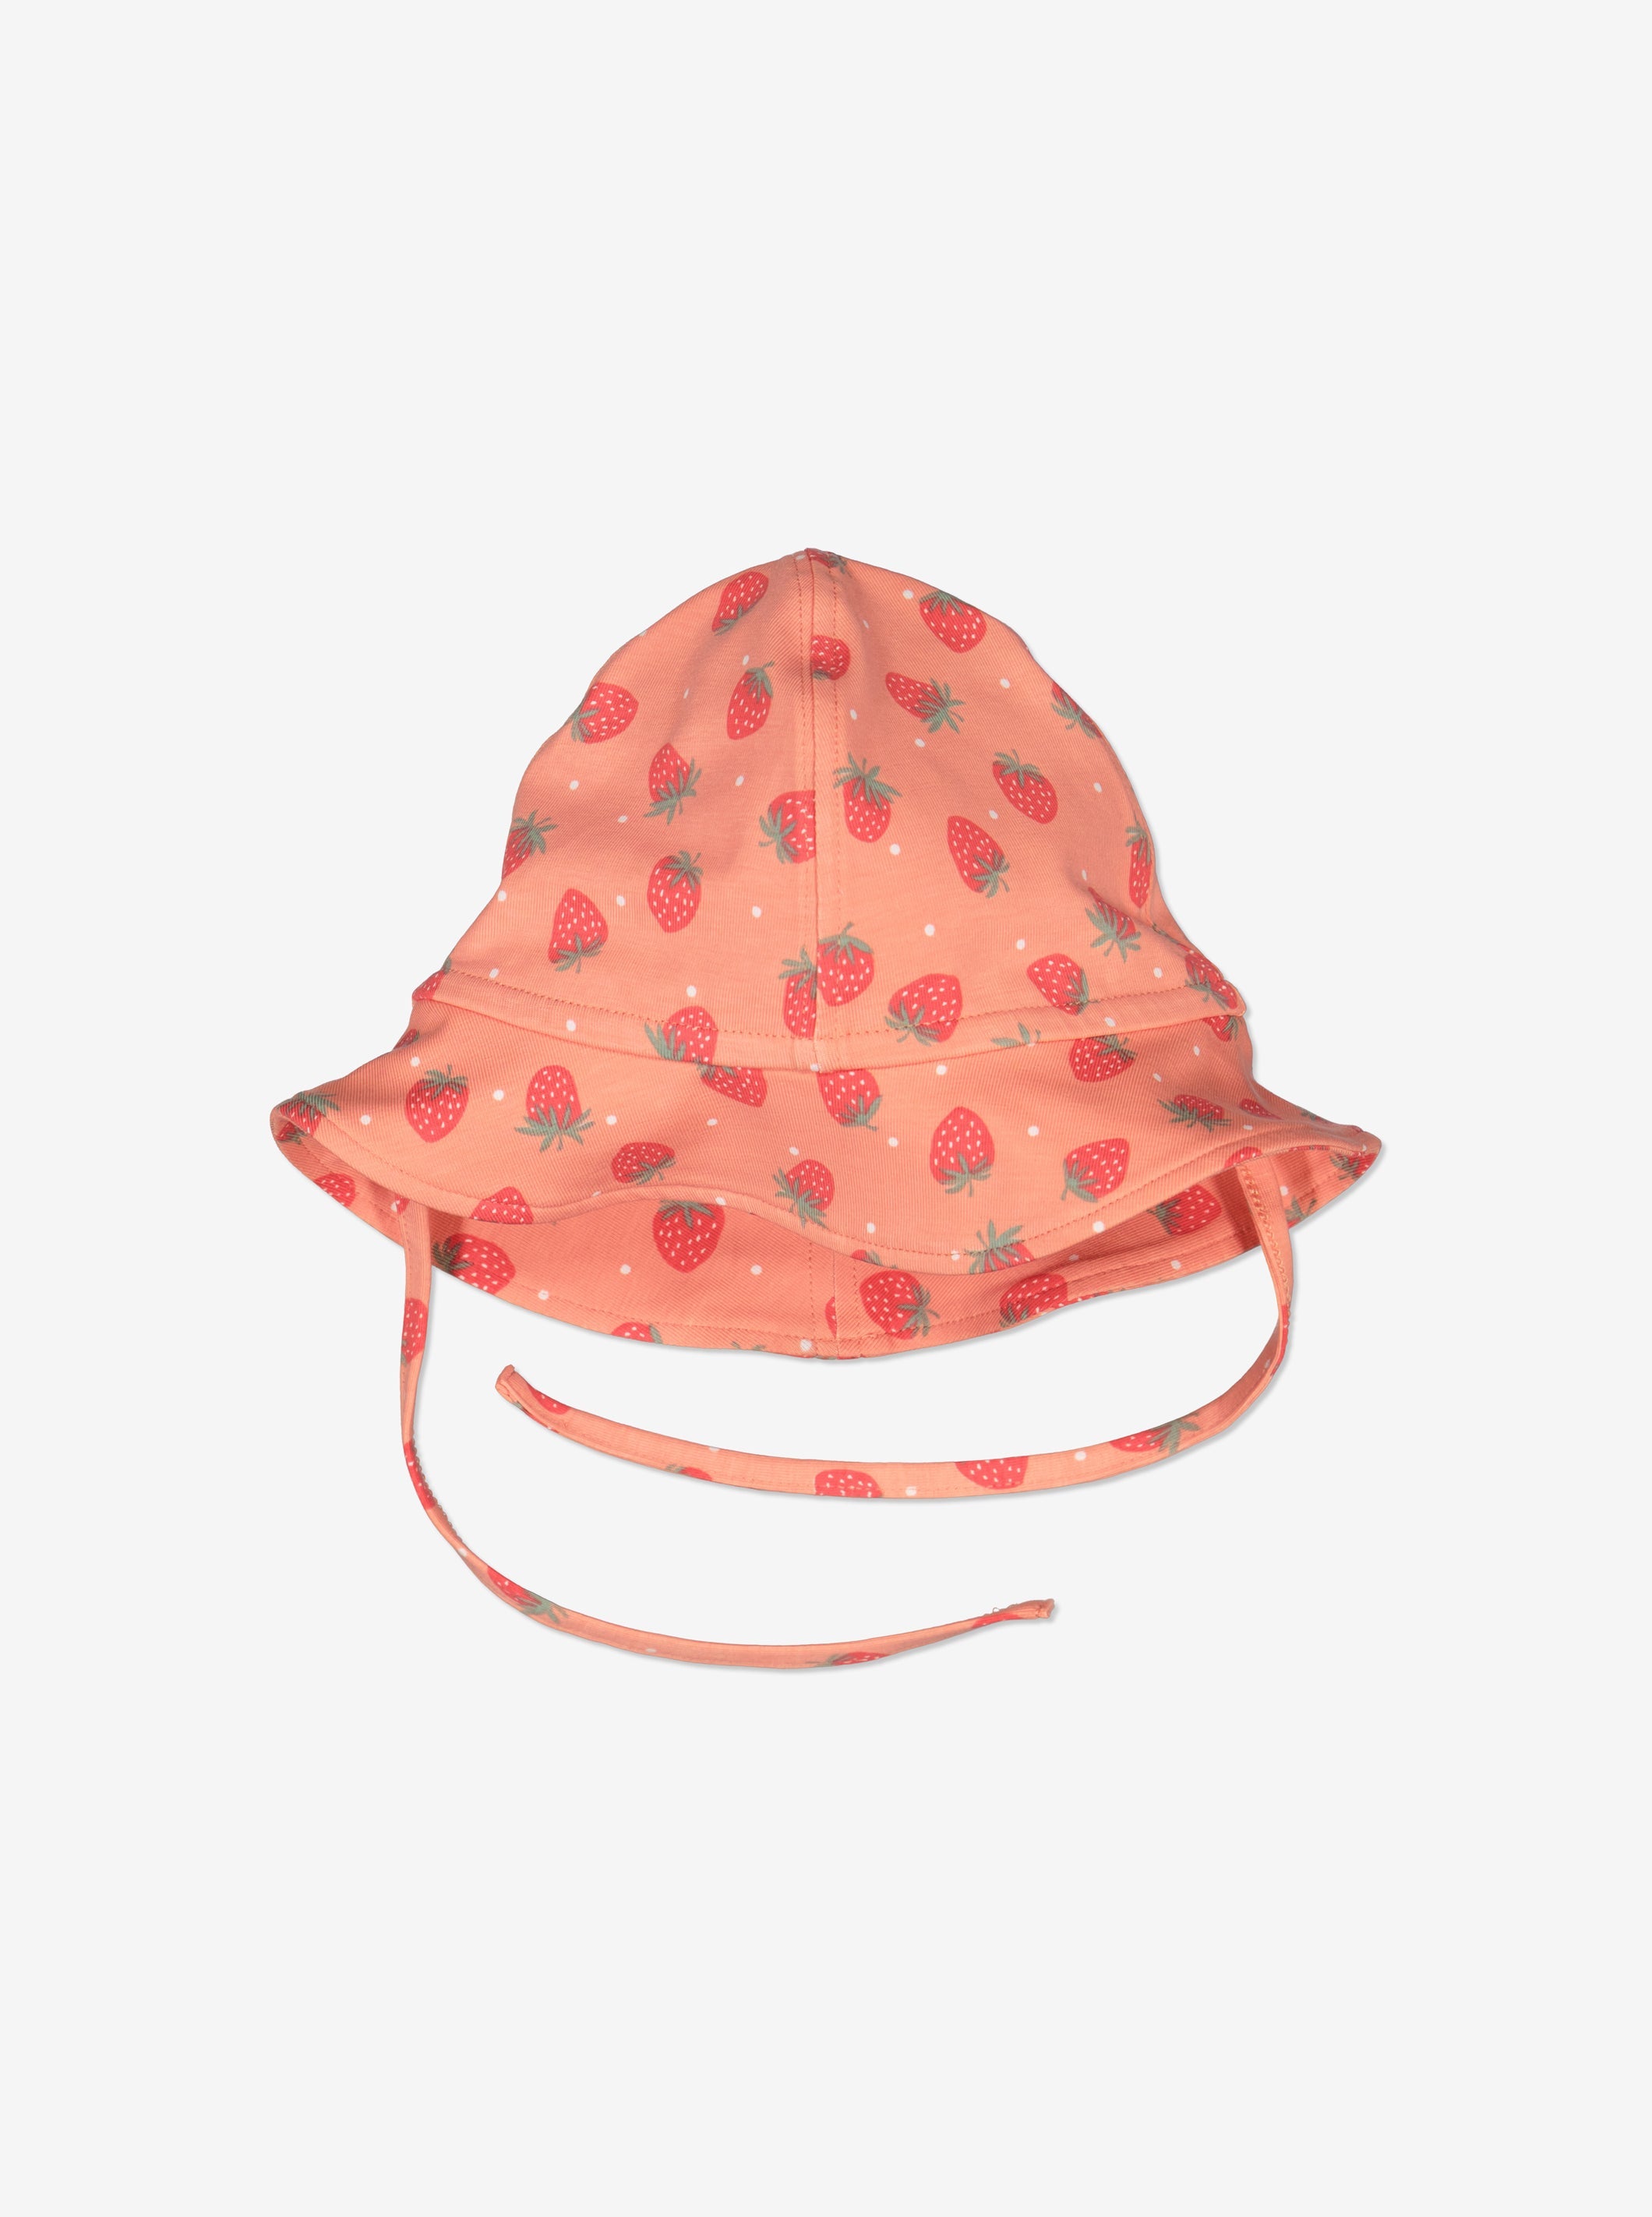 Strawberry Print Baby Sun Hat